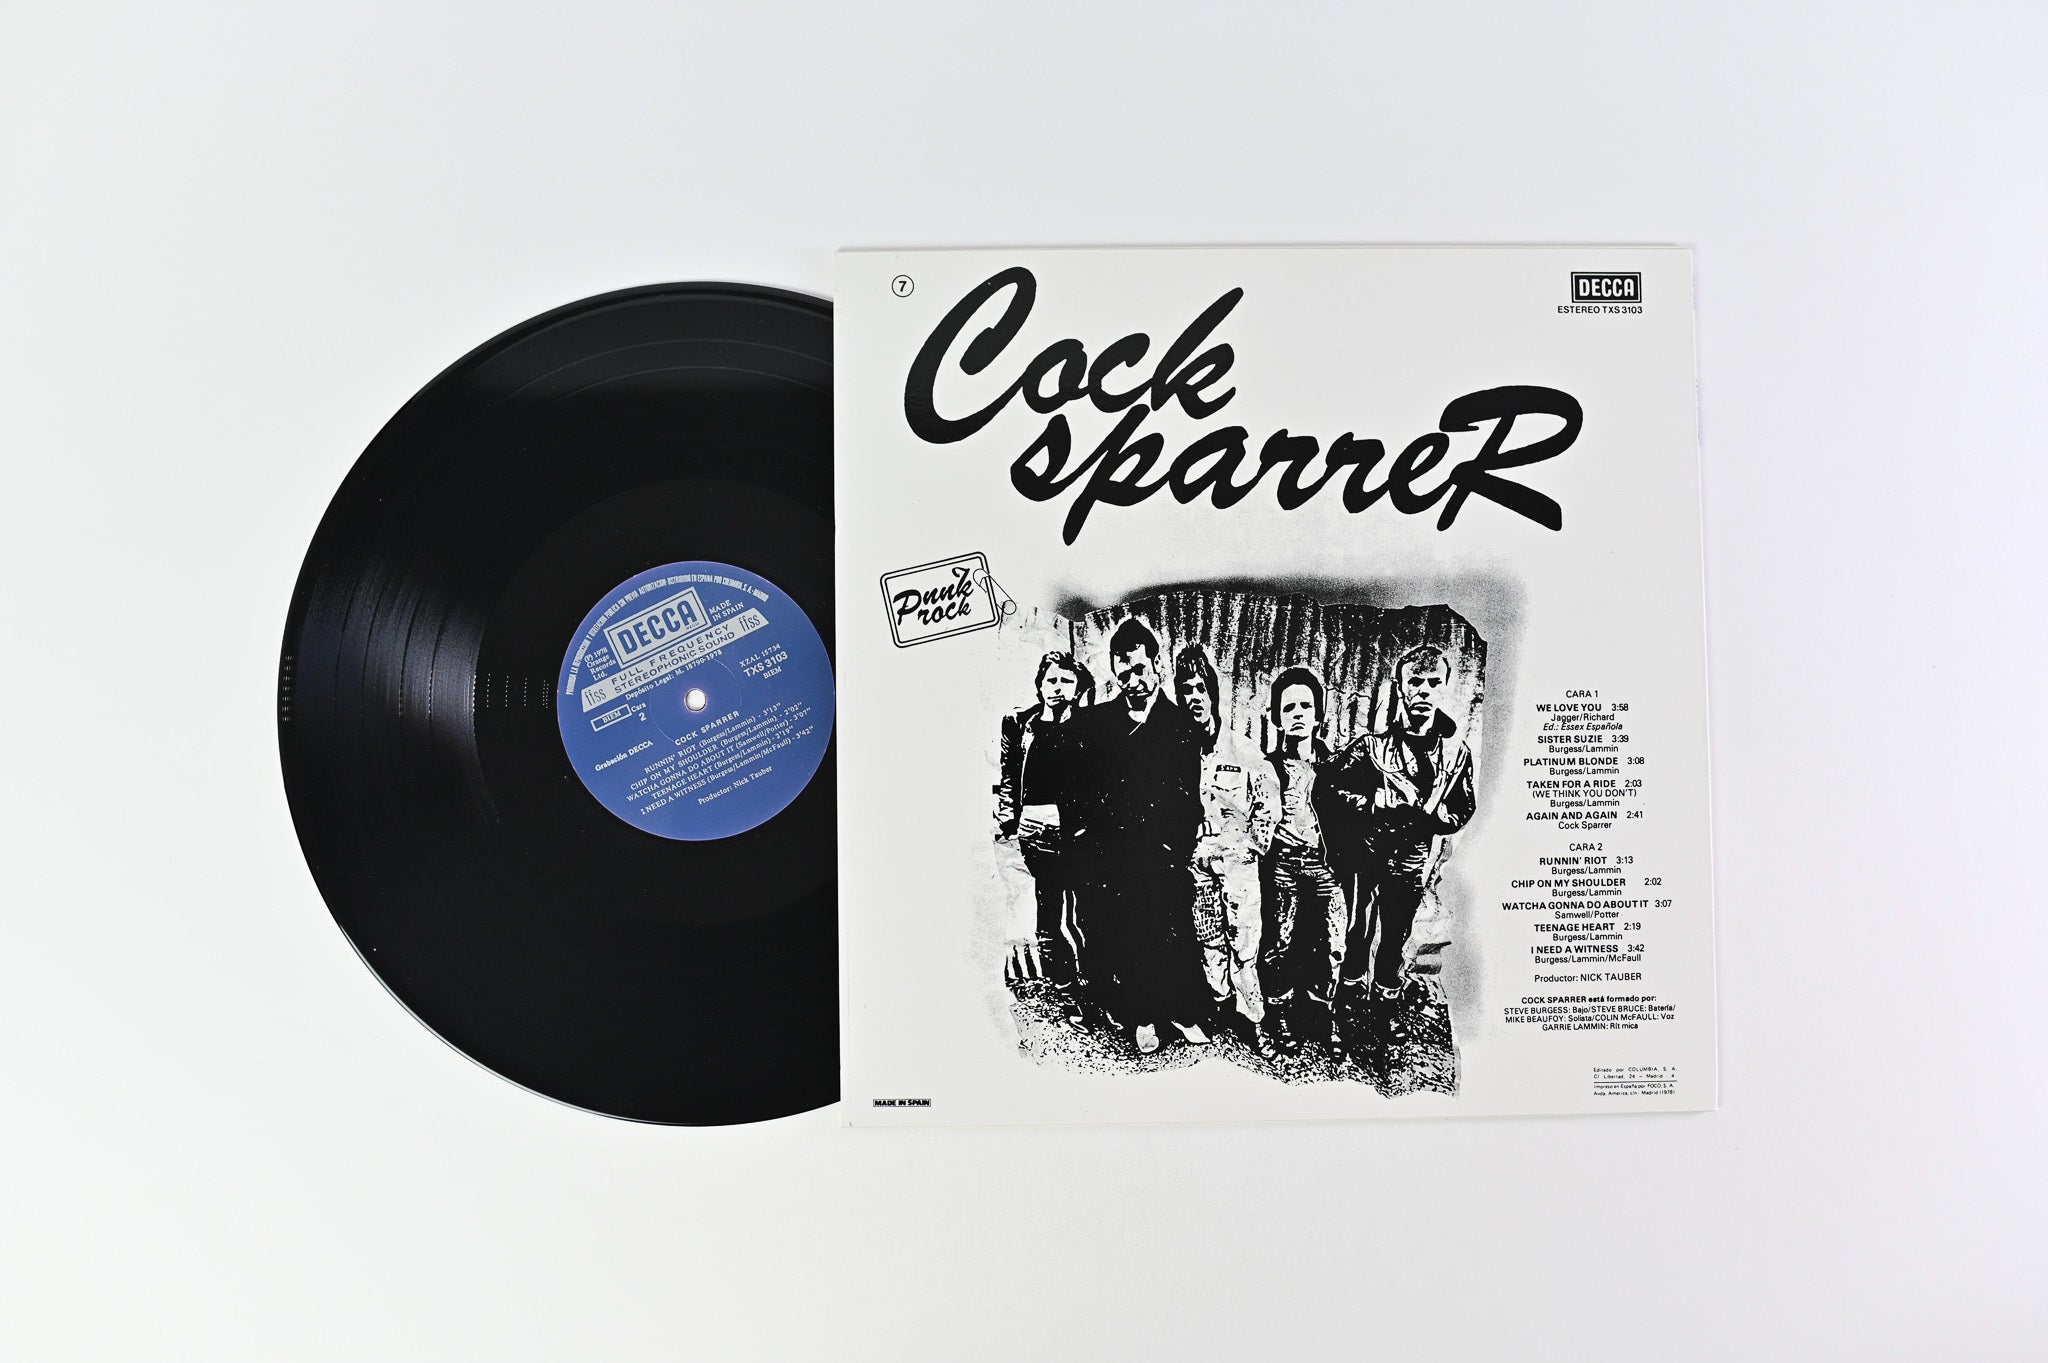 Cock Sparrer - Cock Sparrer on Decca Unofficial